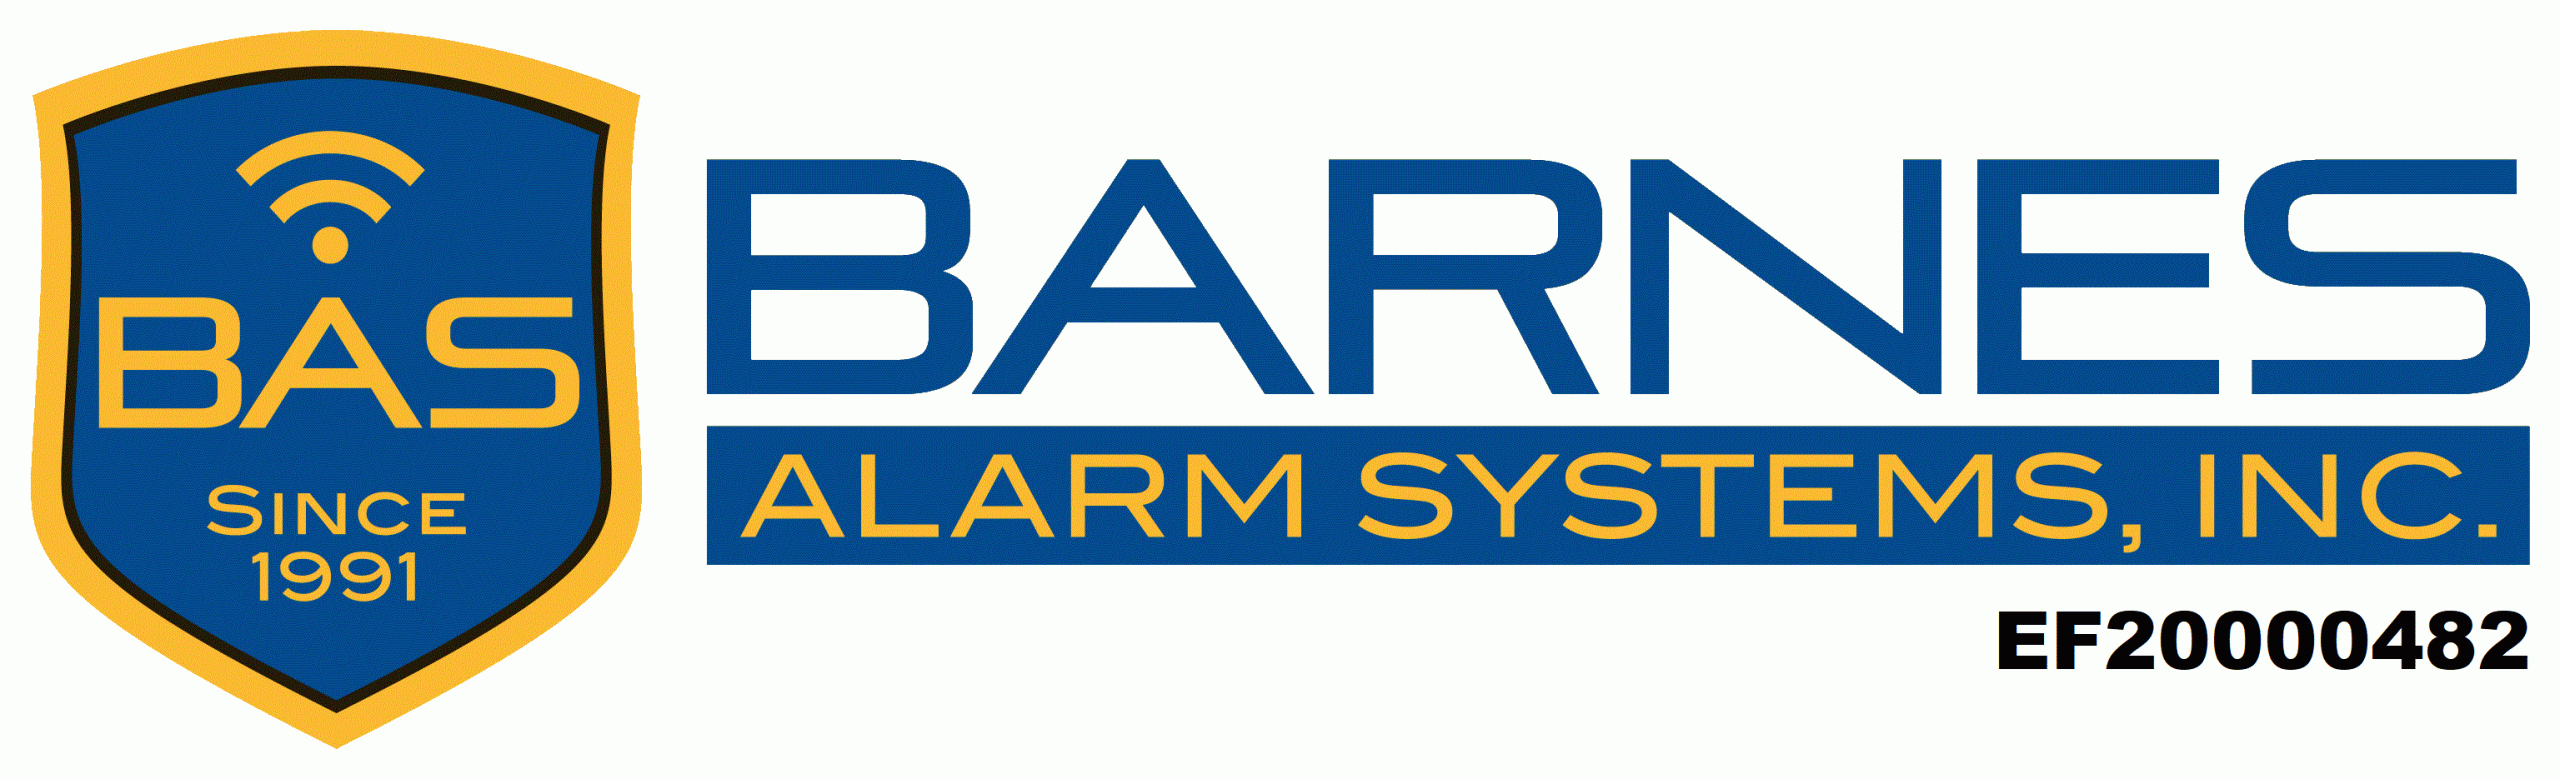 Barnes Alarm Systems